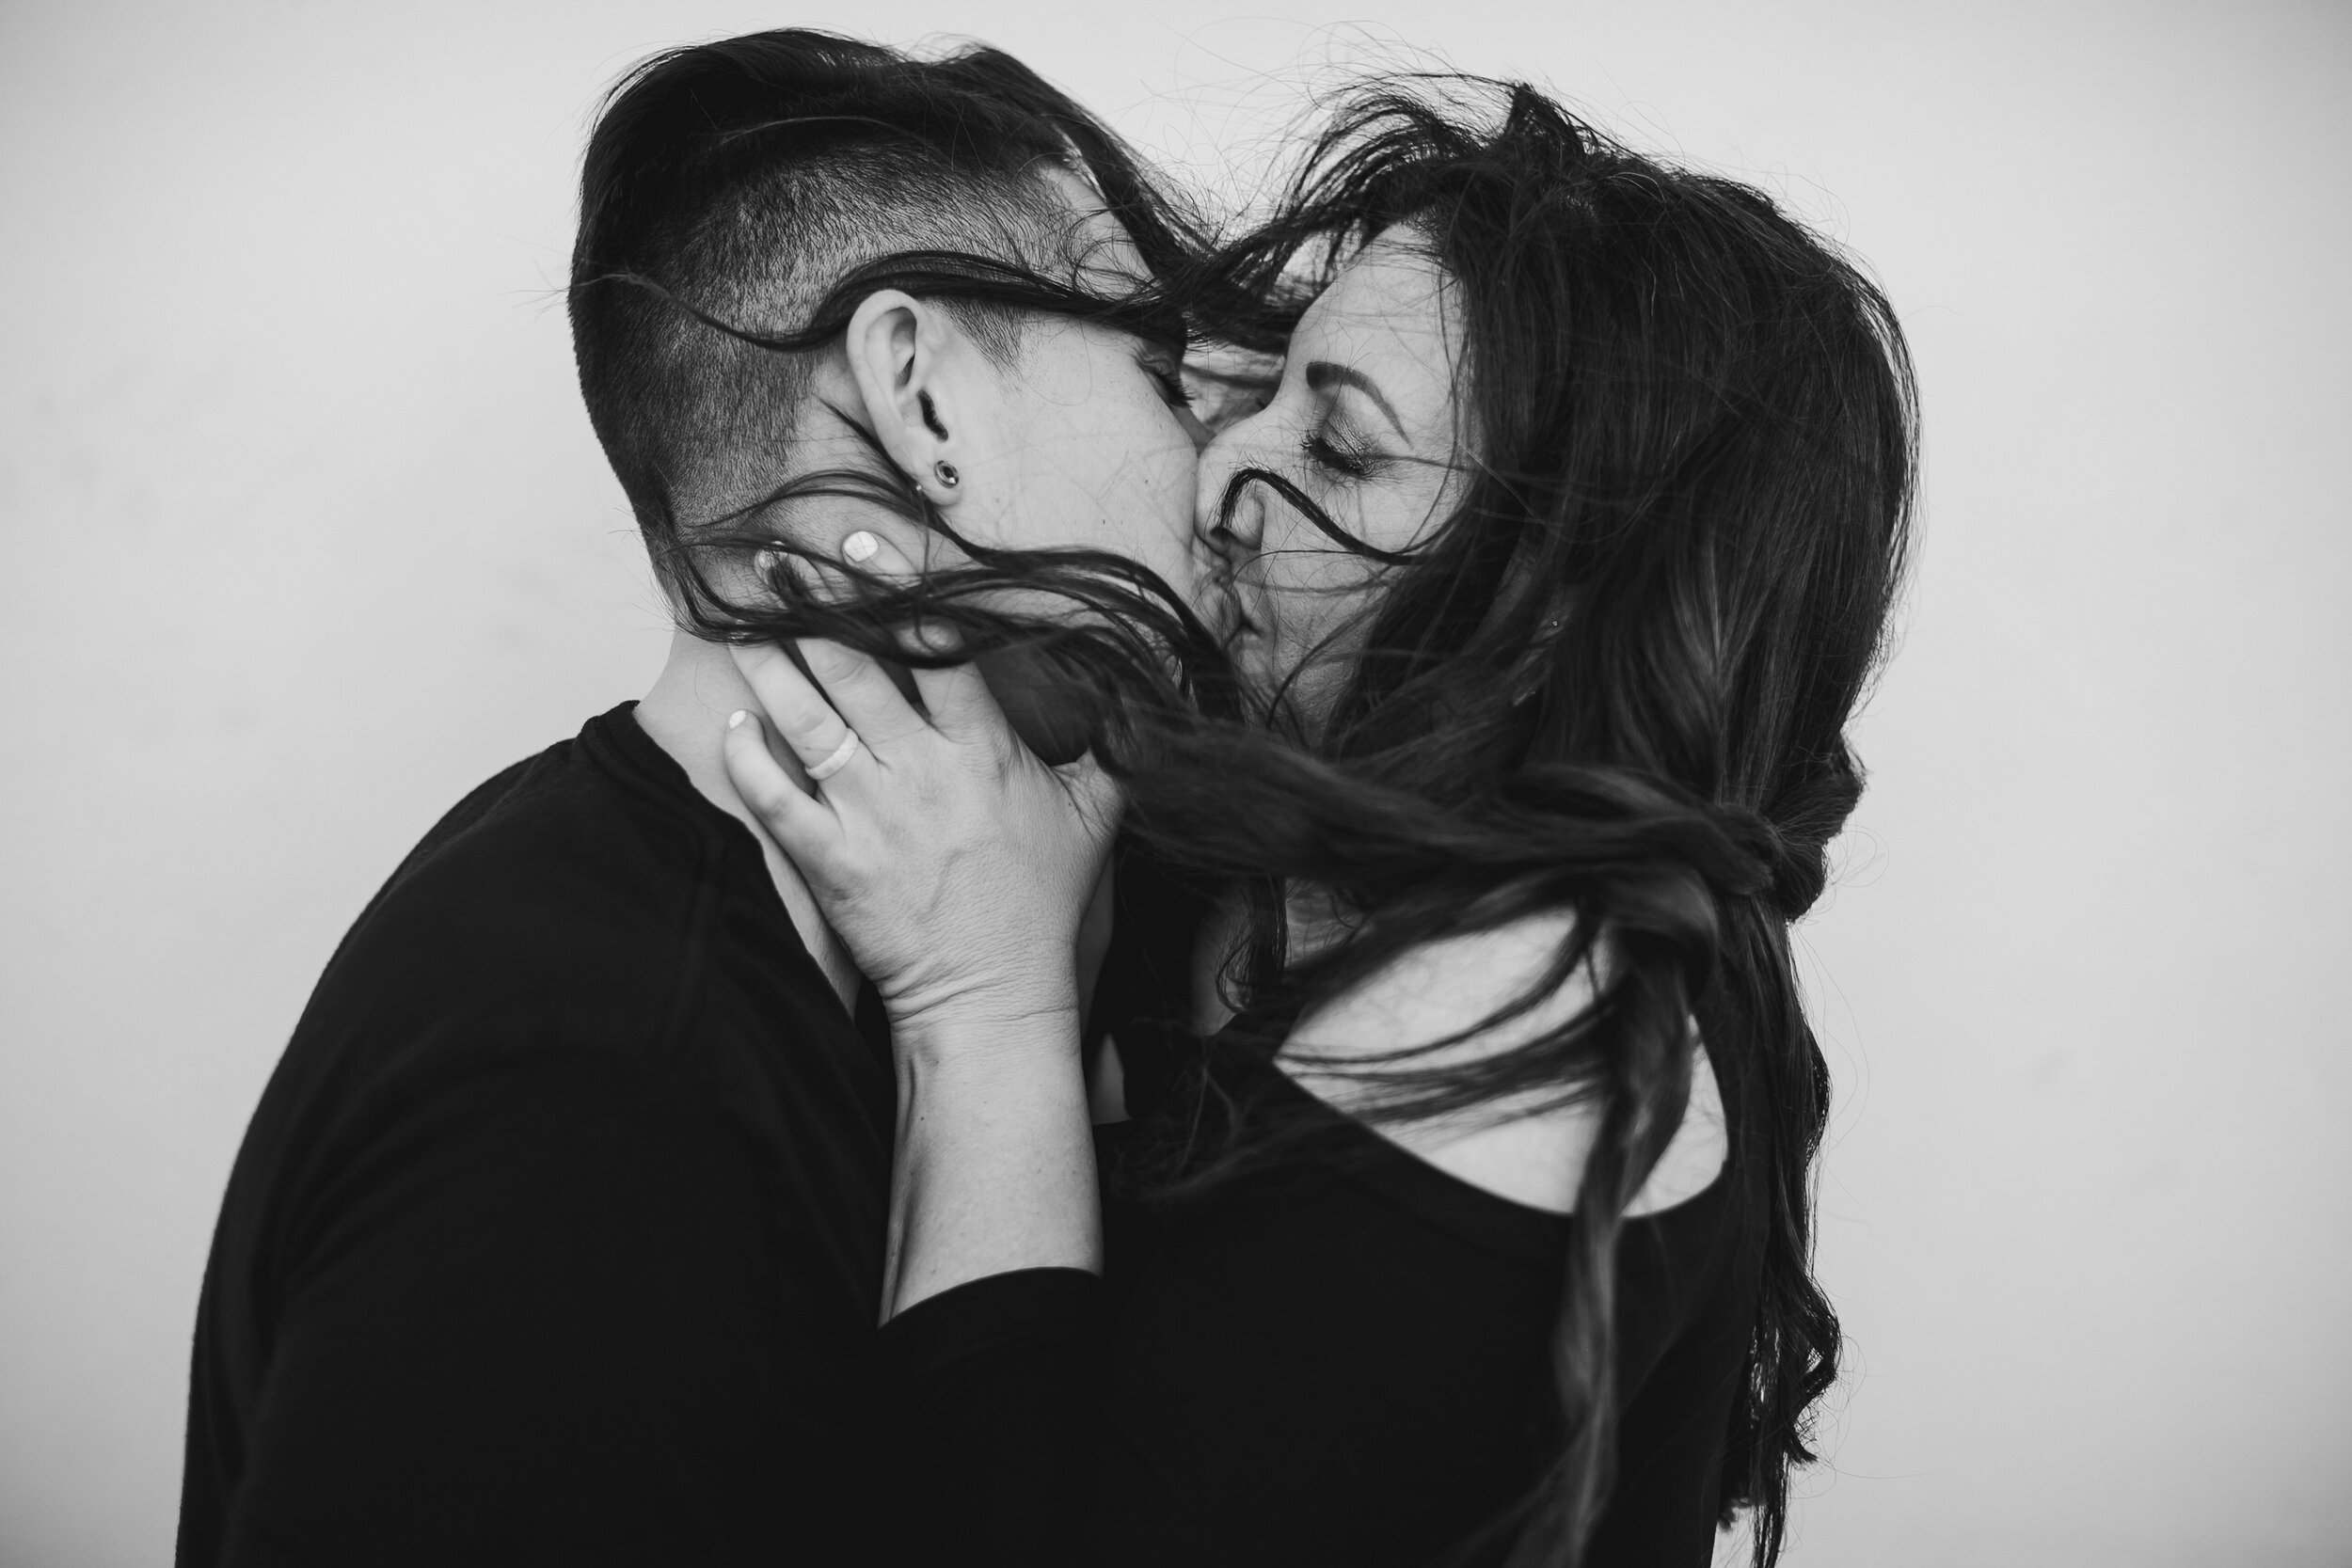 Romantic-black-and-white-portrait-lesbians-kissing-tiny-house-photo